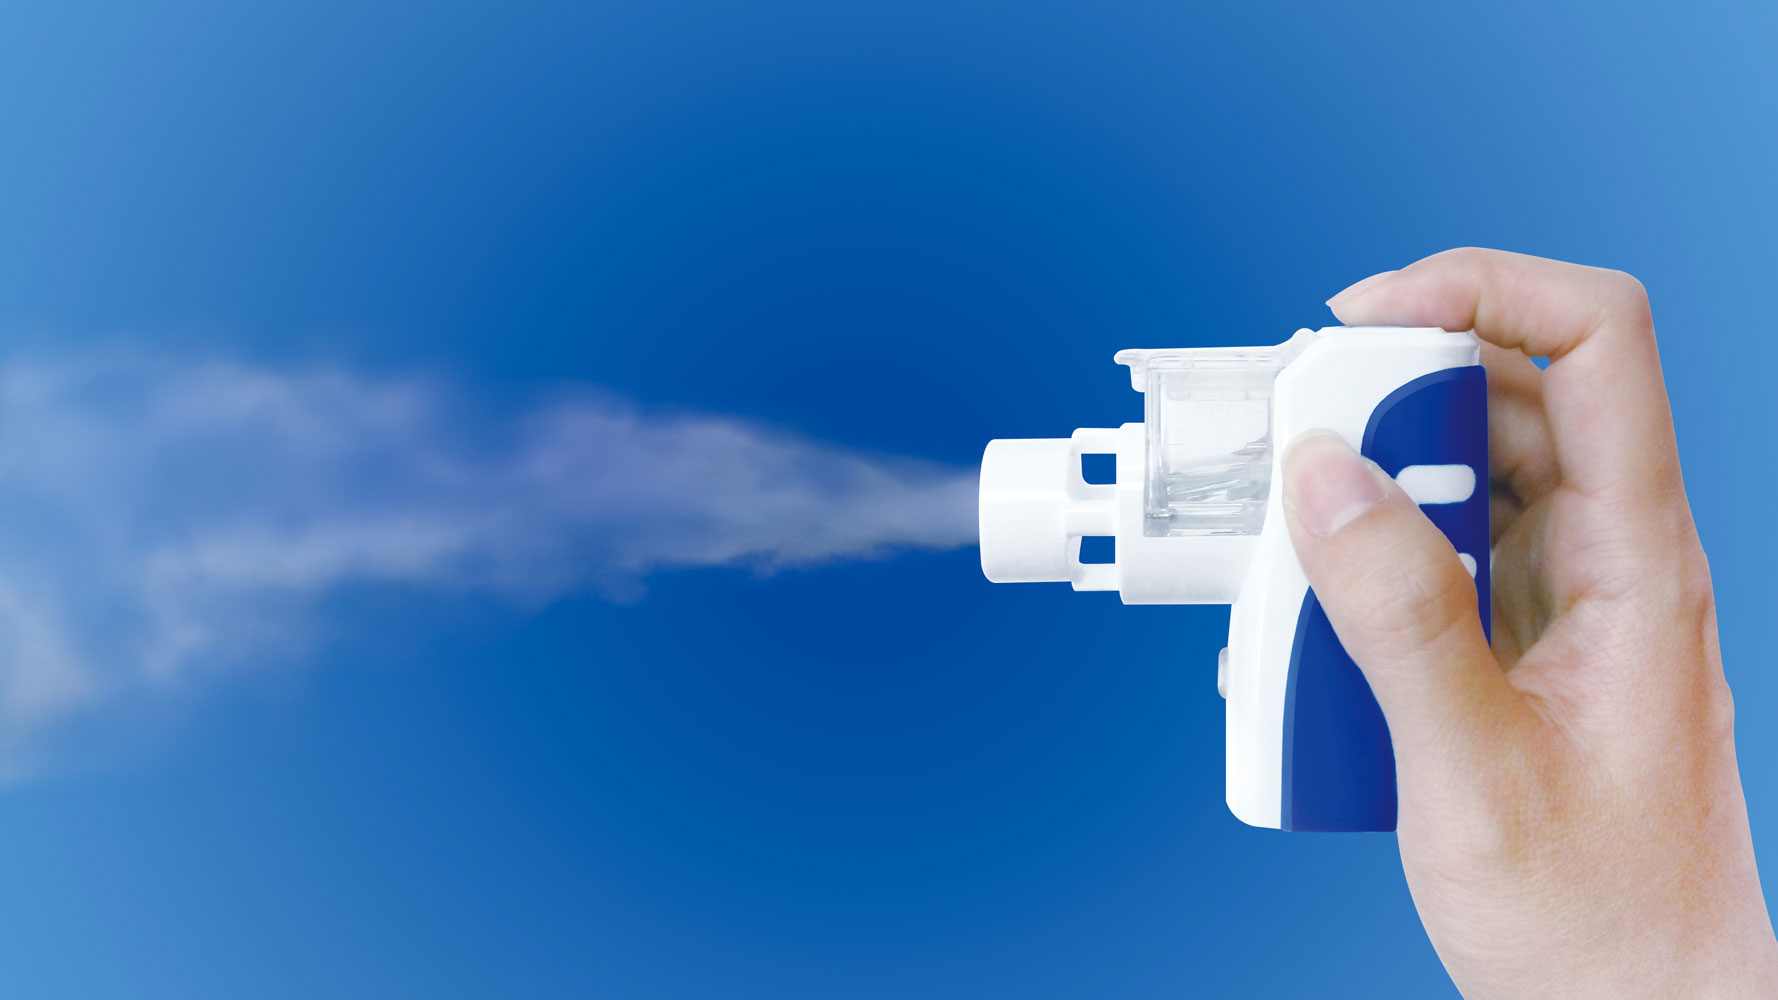 Pocket Air® tragbares Inhalationsgerät Set